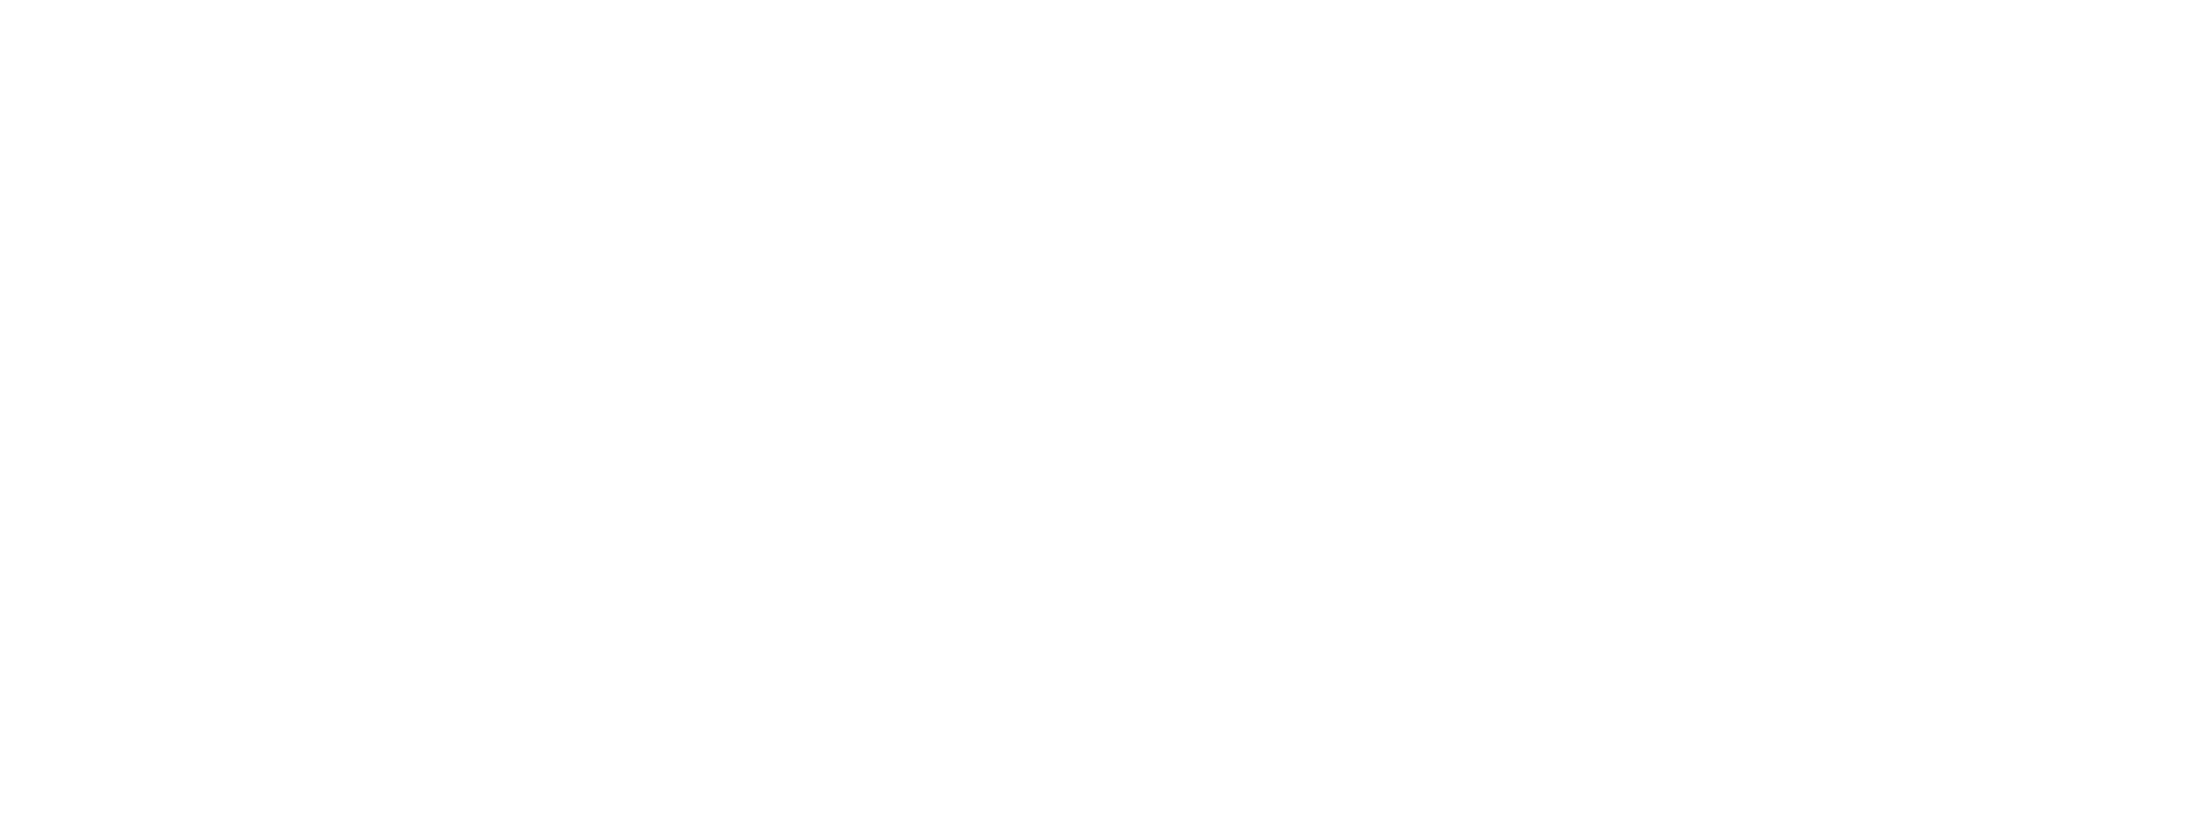 Logo Moco Cocktails